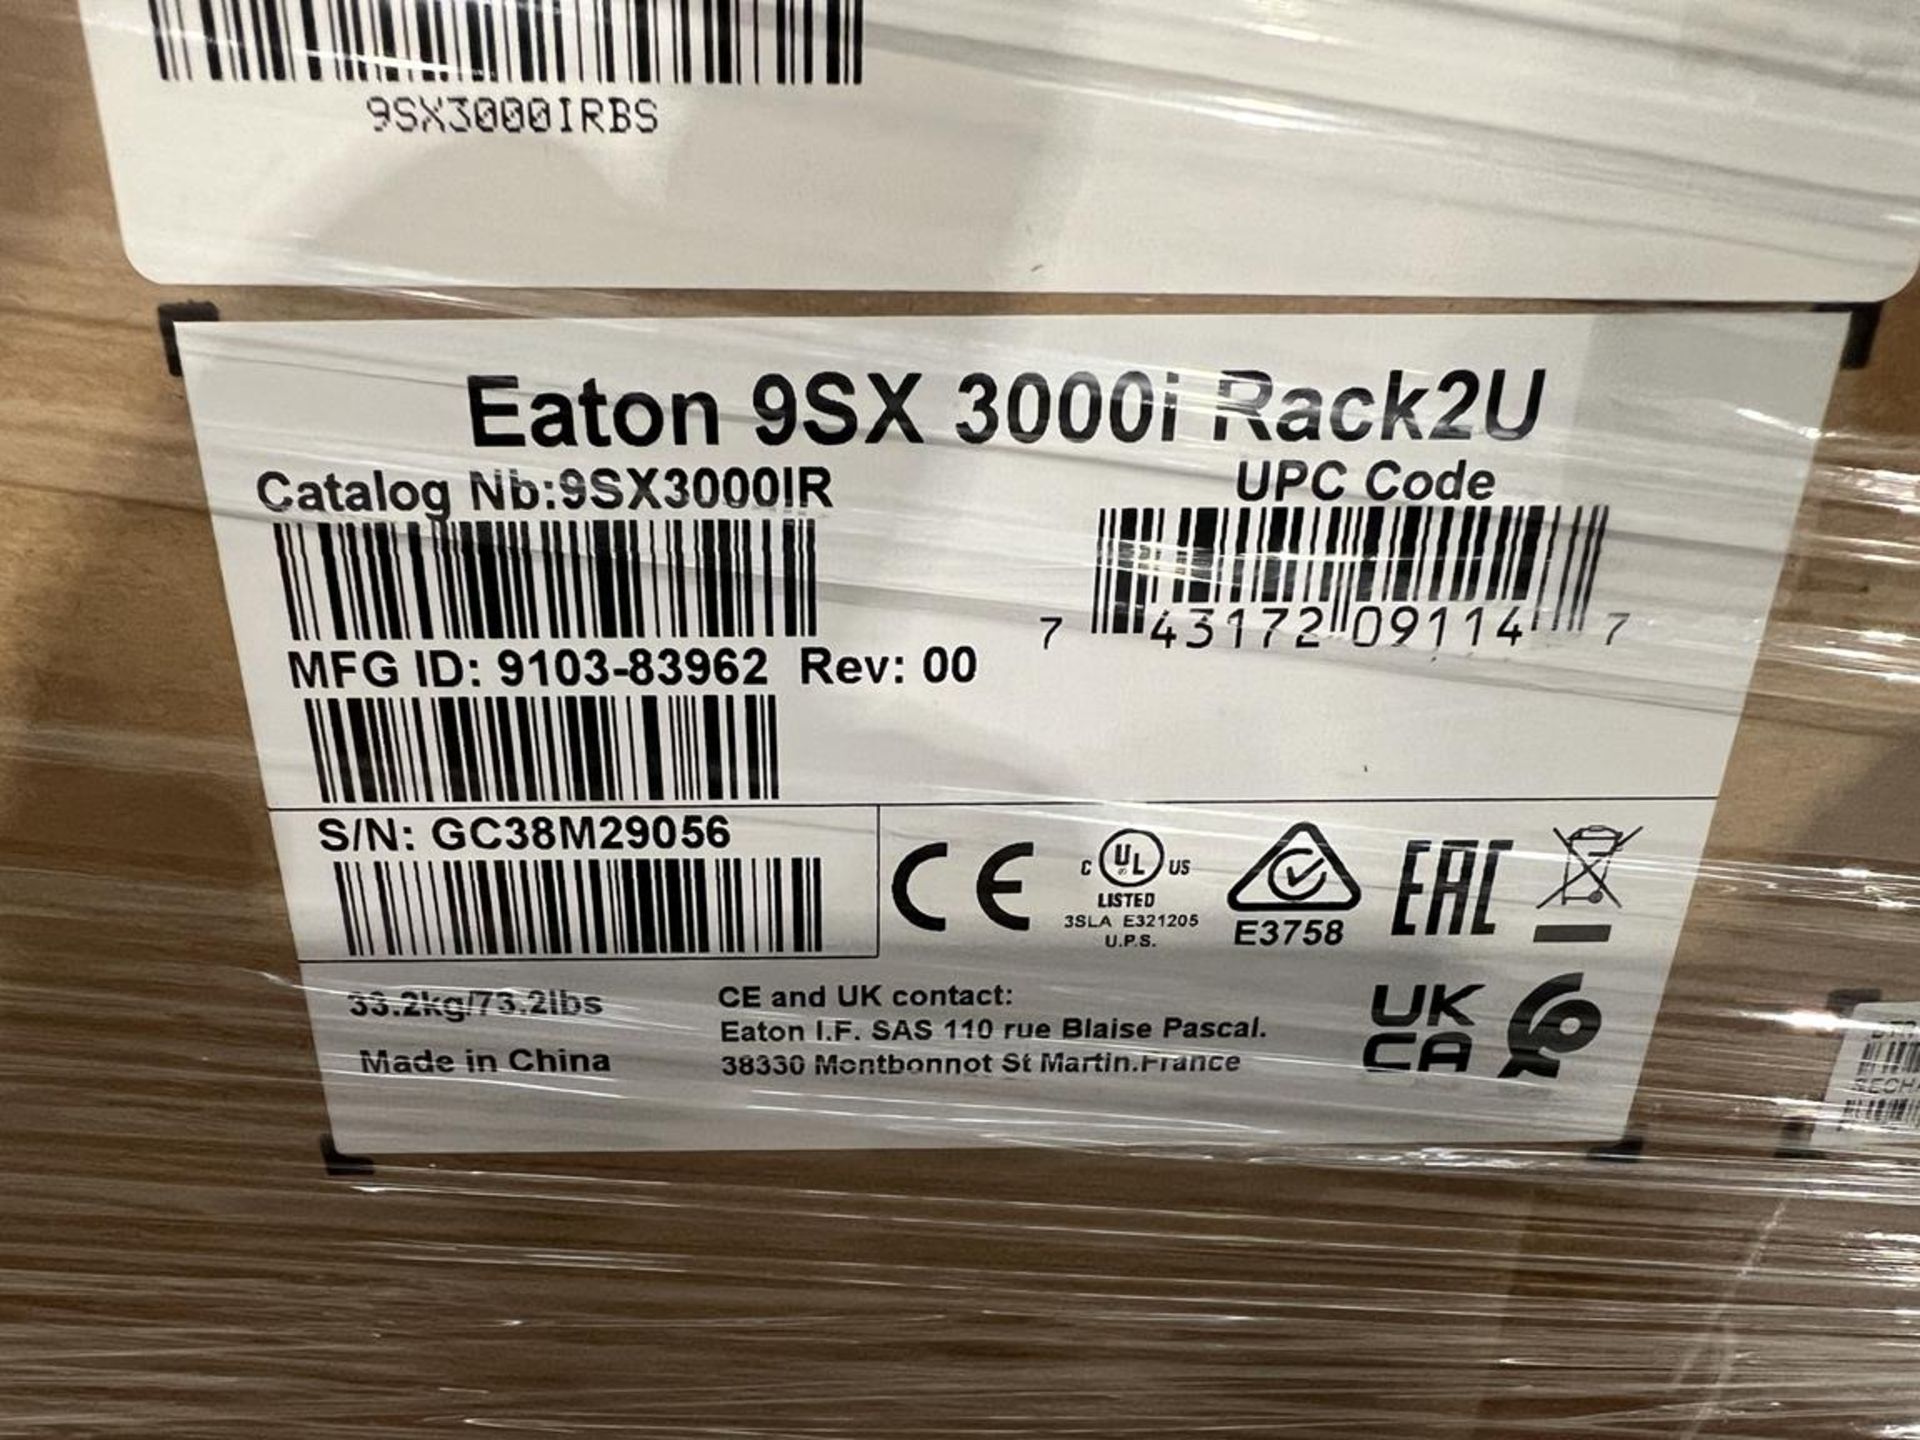 5x (no.) Eaton 9SX 3000i rack 2U with BS cord 16A smart batteries - Image 2 of 3